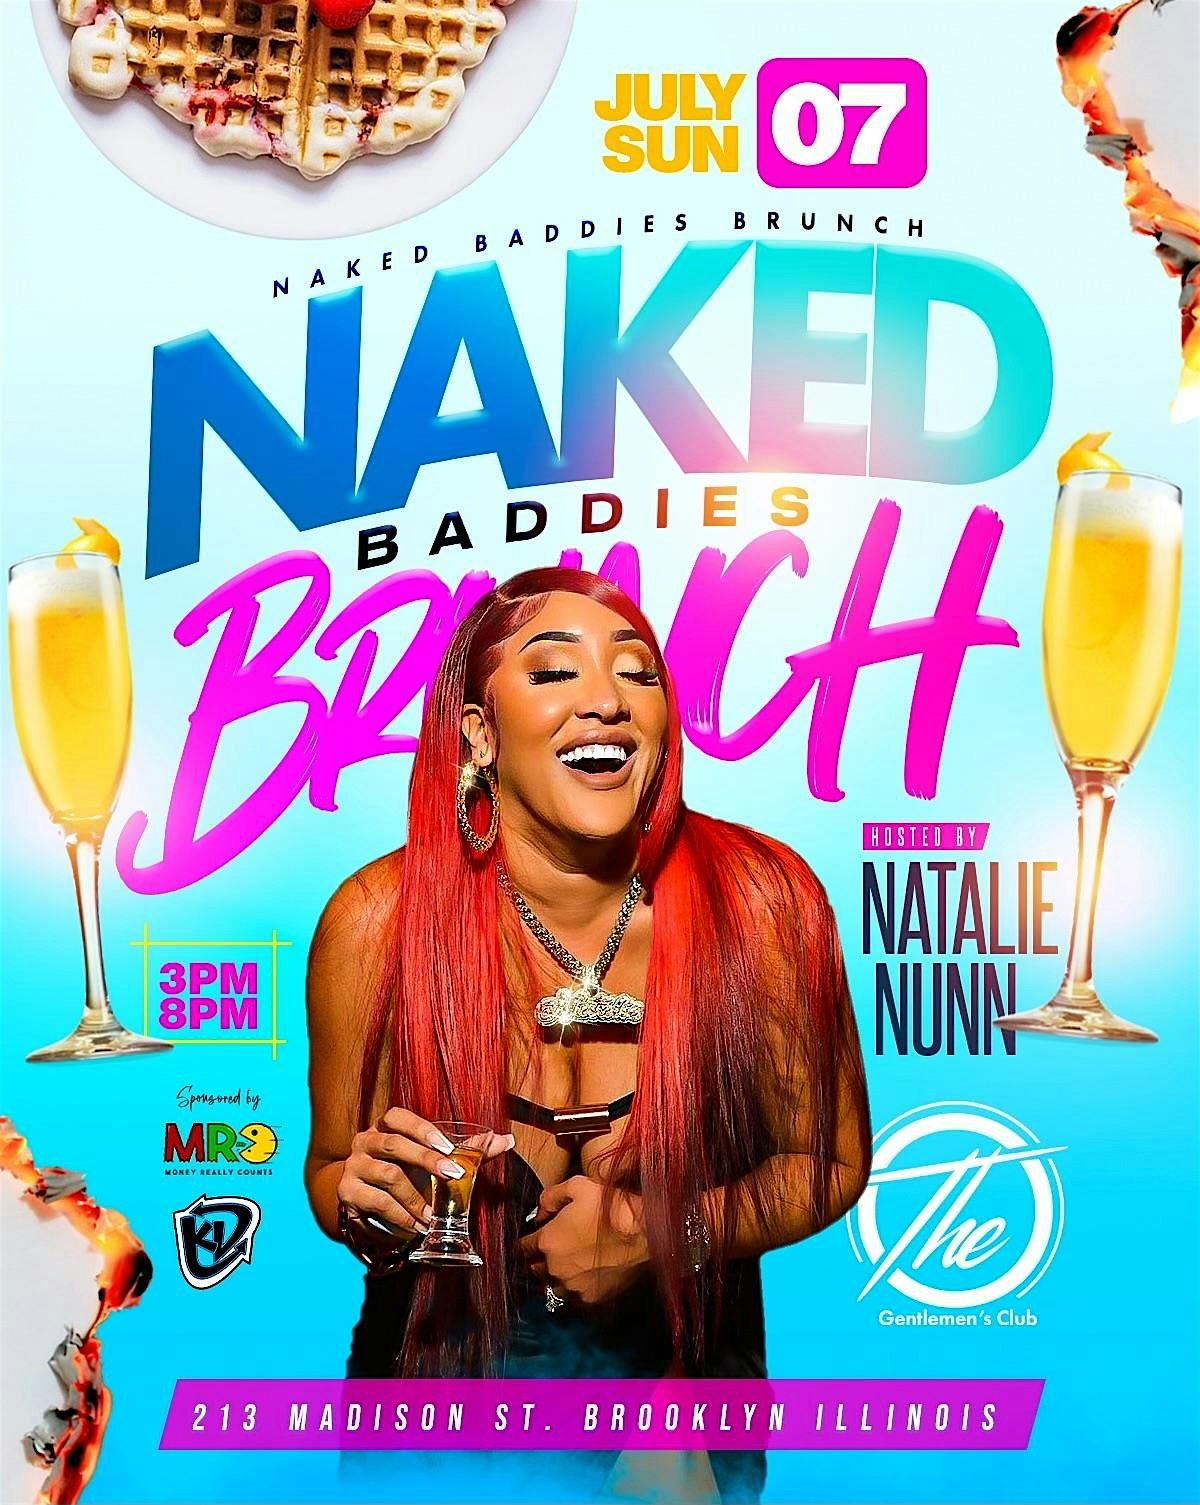 The O presents: Natalie Nunn Naked Baddies Brunch Sun July7th